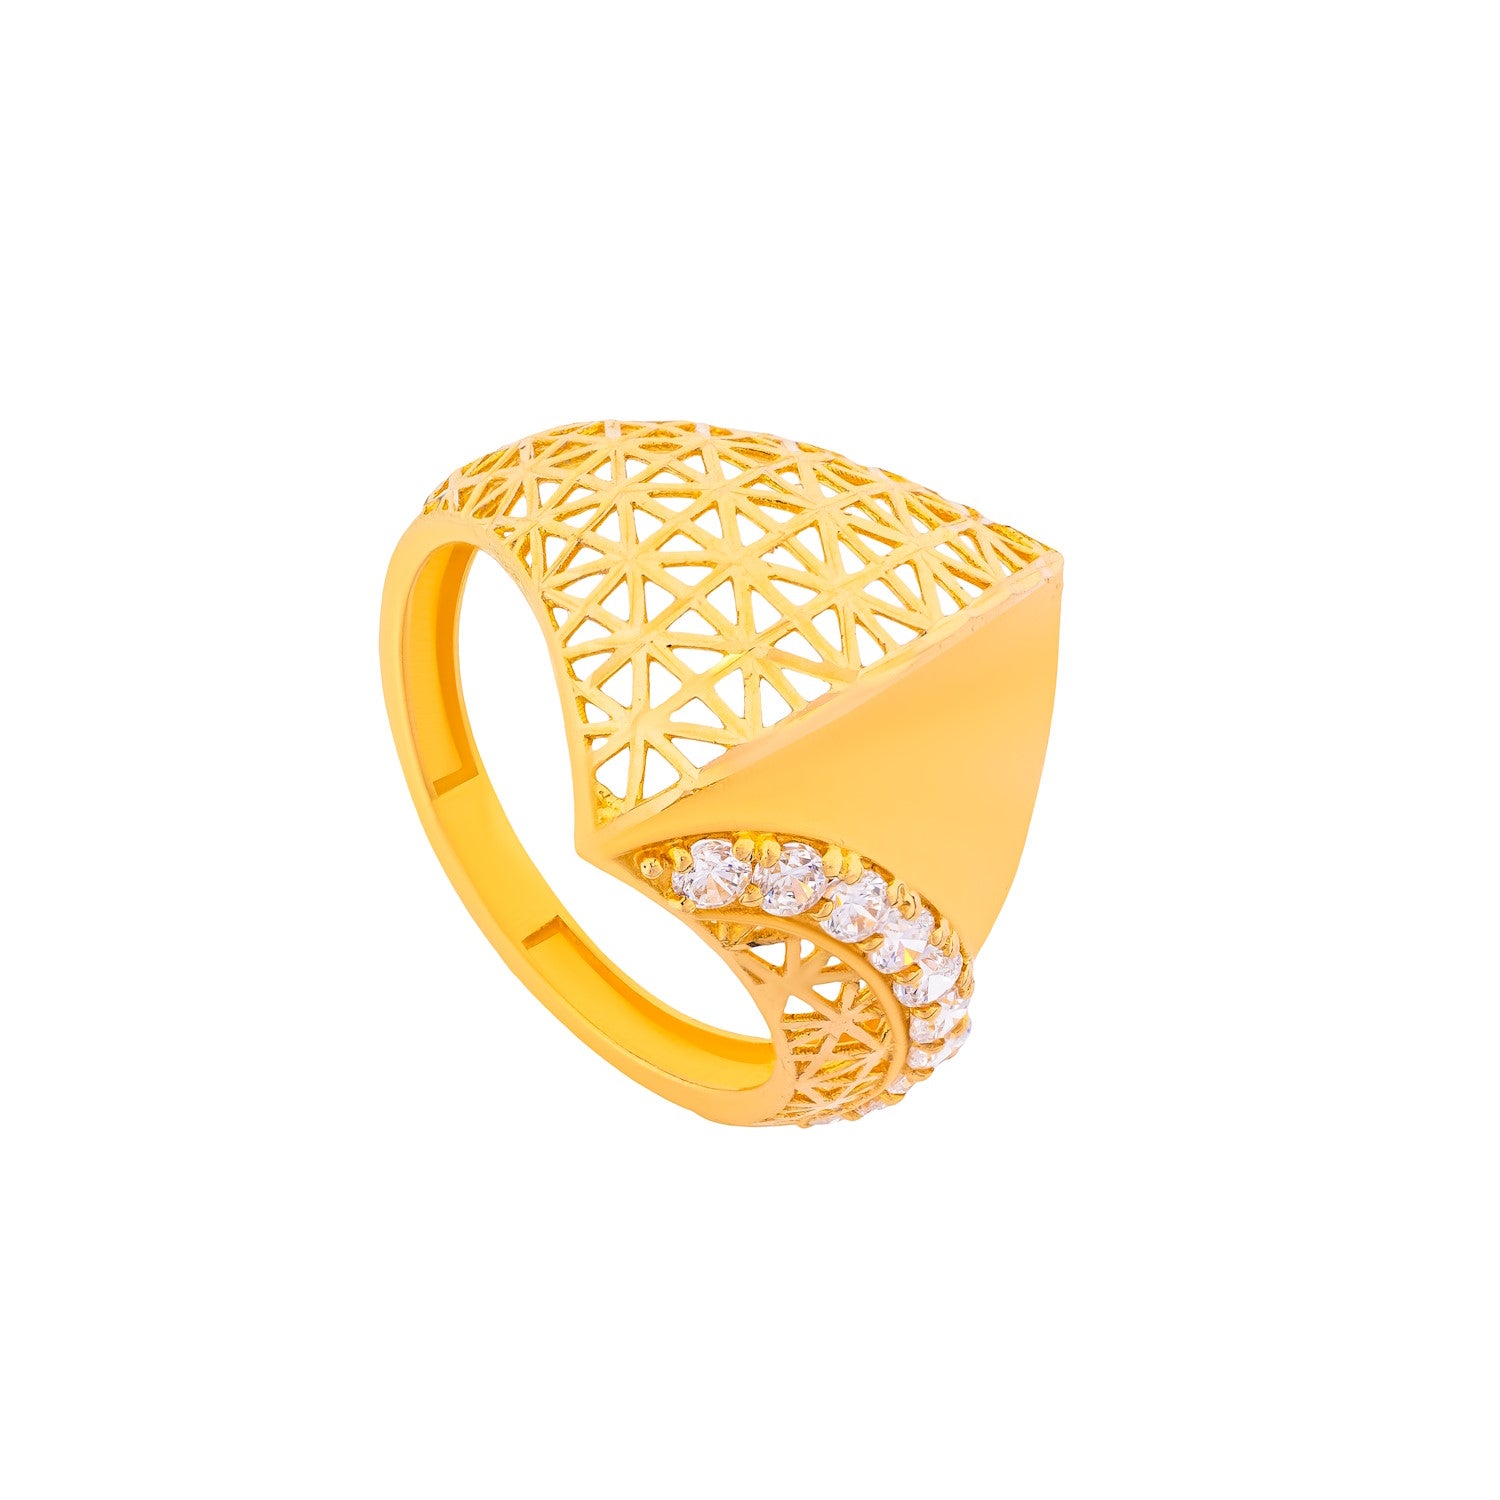 Lavin 21K Yellow Gold Ring